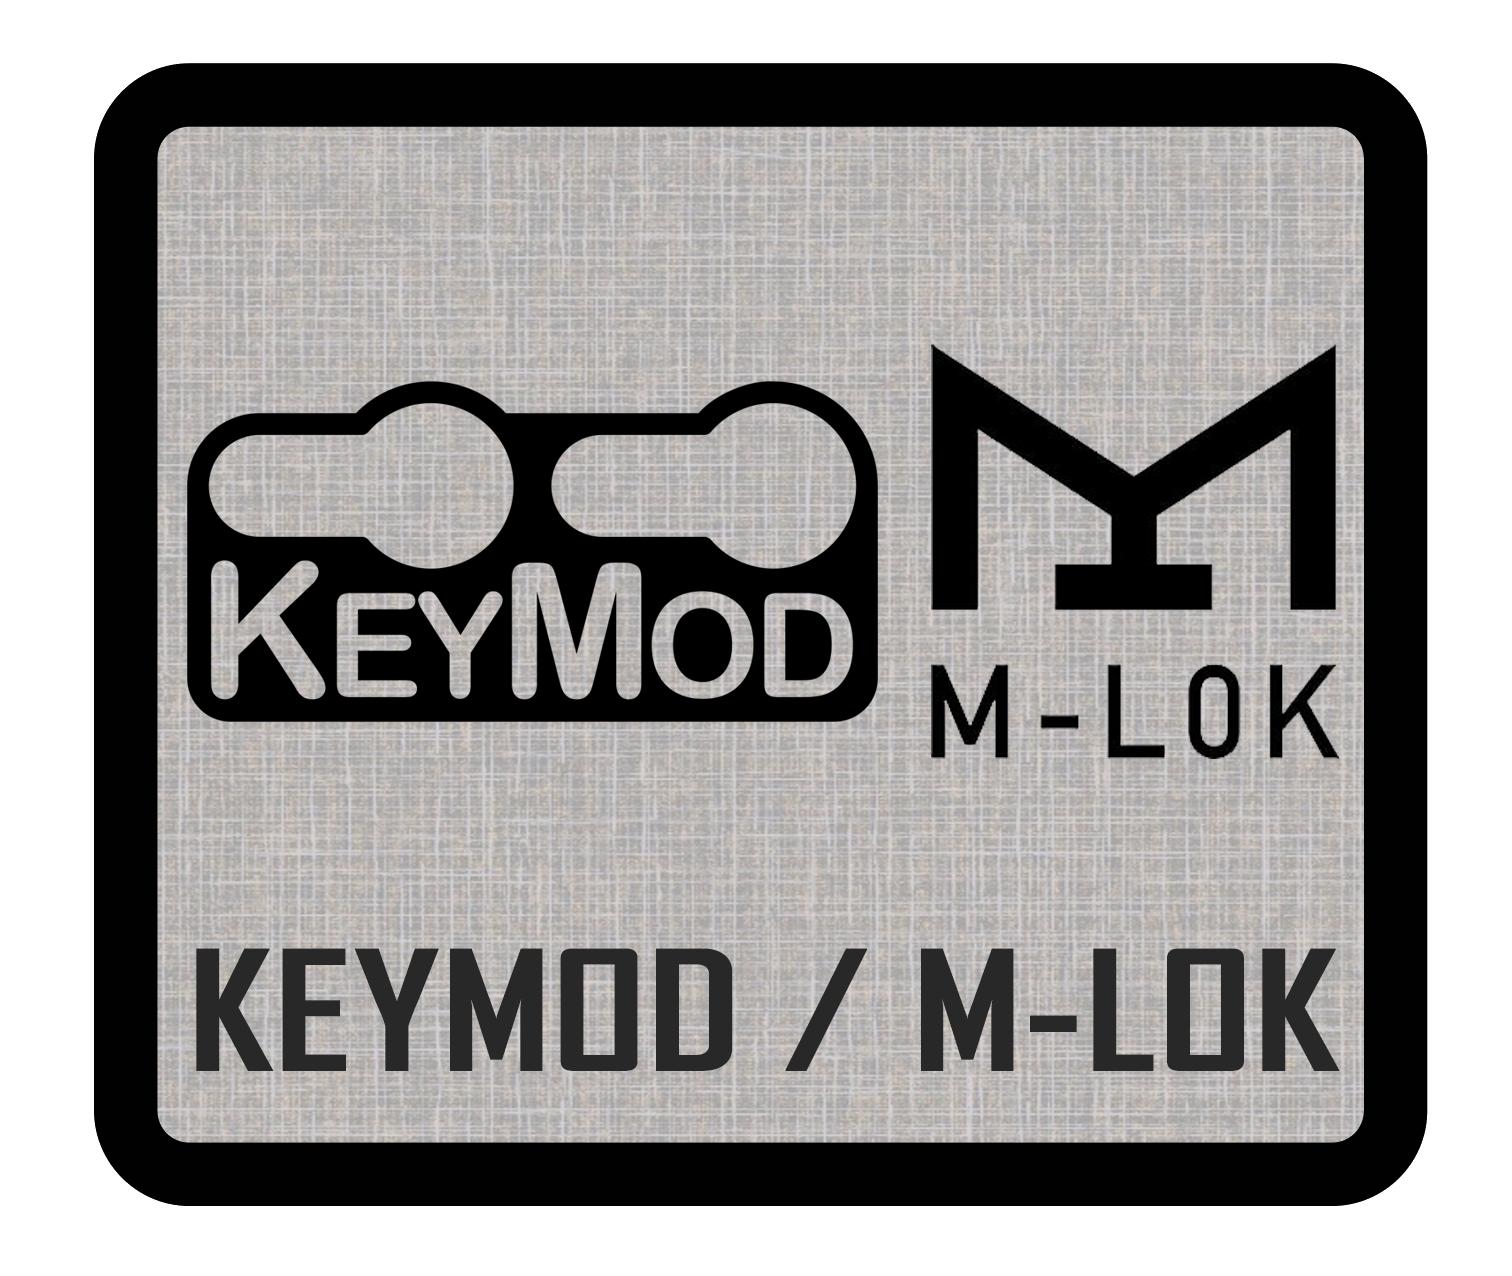 KEY-MOD / M-LOK